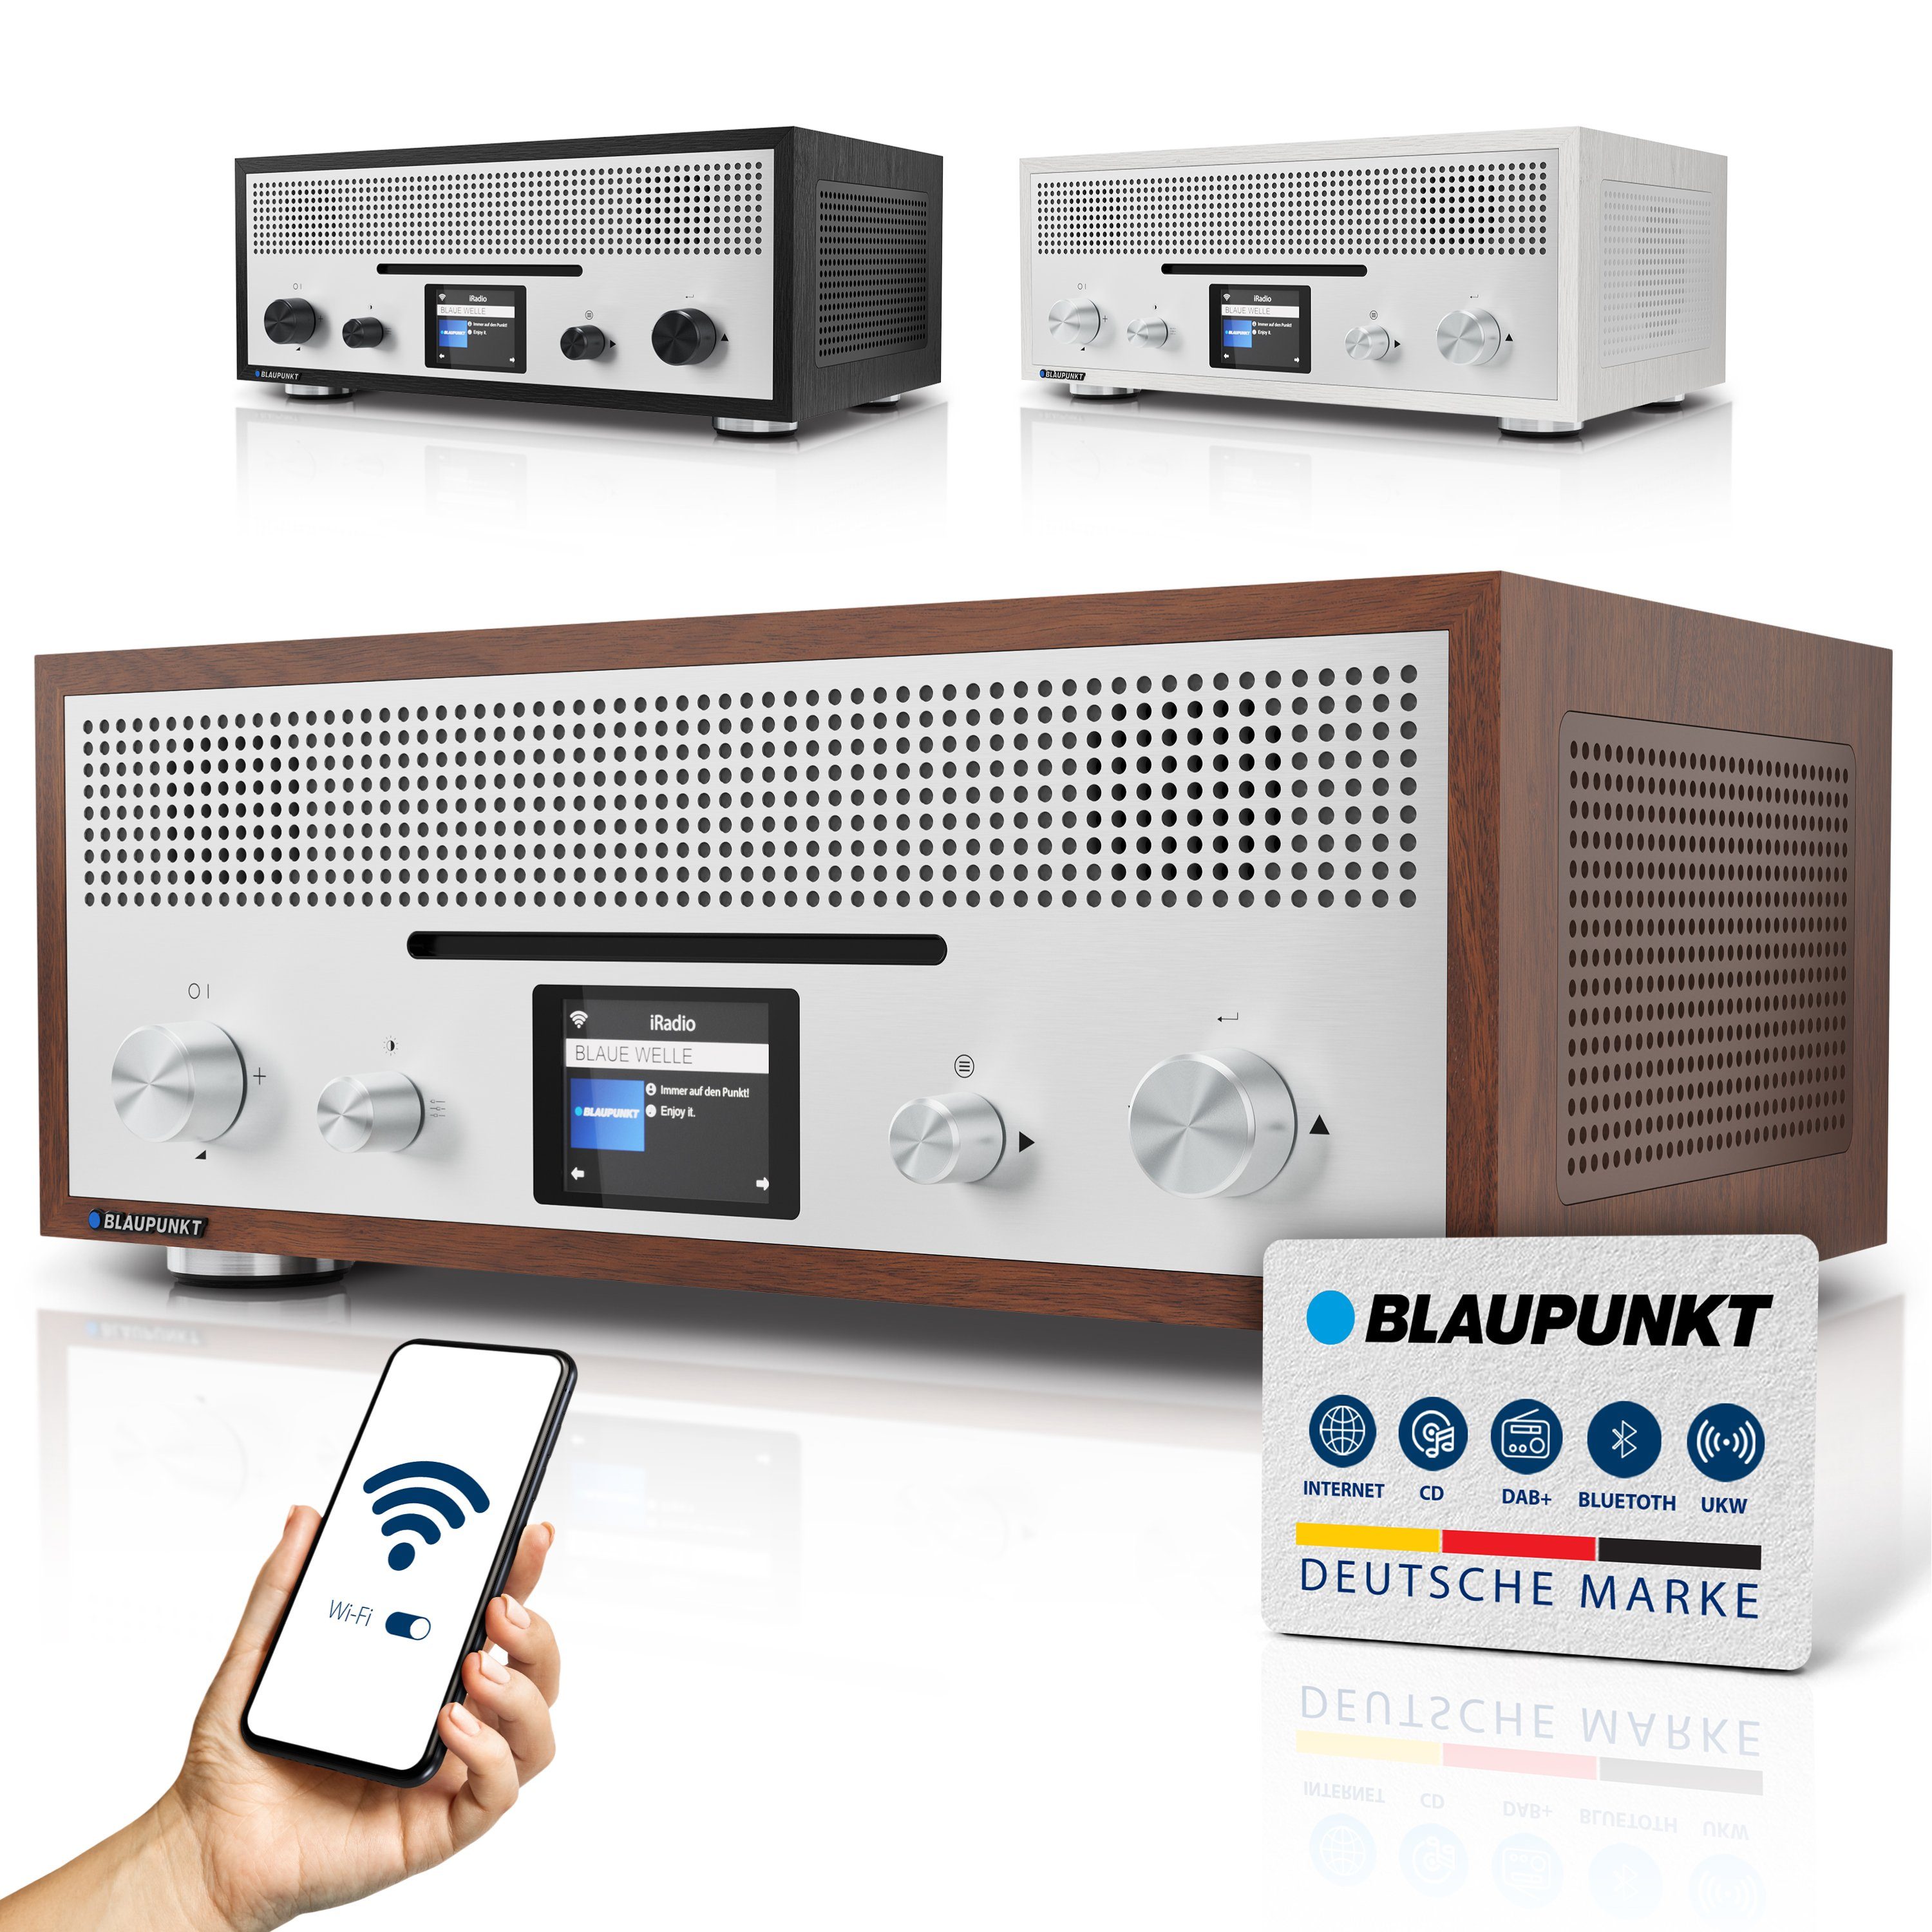 Blaupunkt Internet, 1900 W) mit Internet-Radio DAB+, braun BT RXD CD, Internetradio (Digitalradio Milano, 30,00 FM, (DAB),